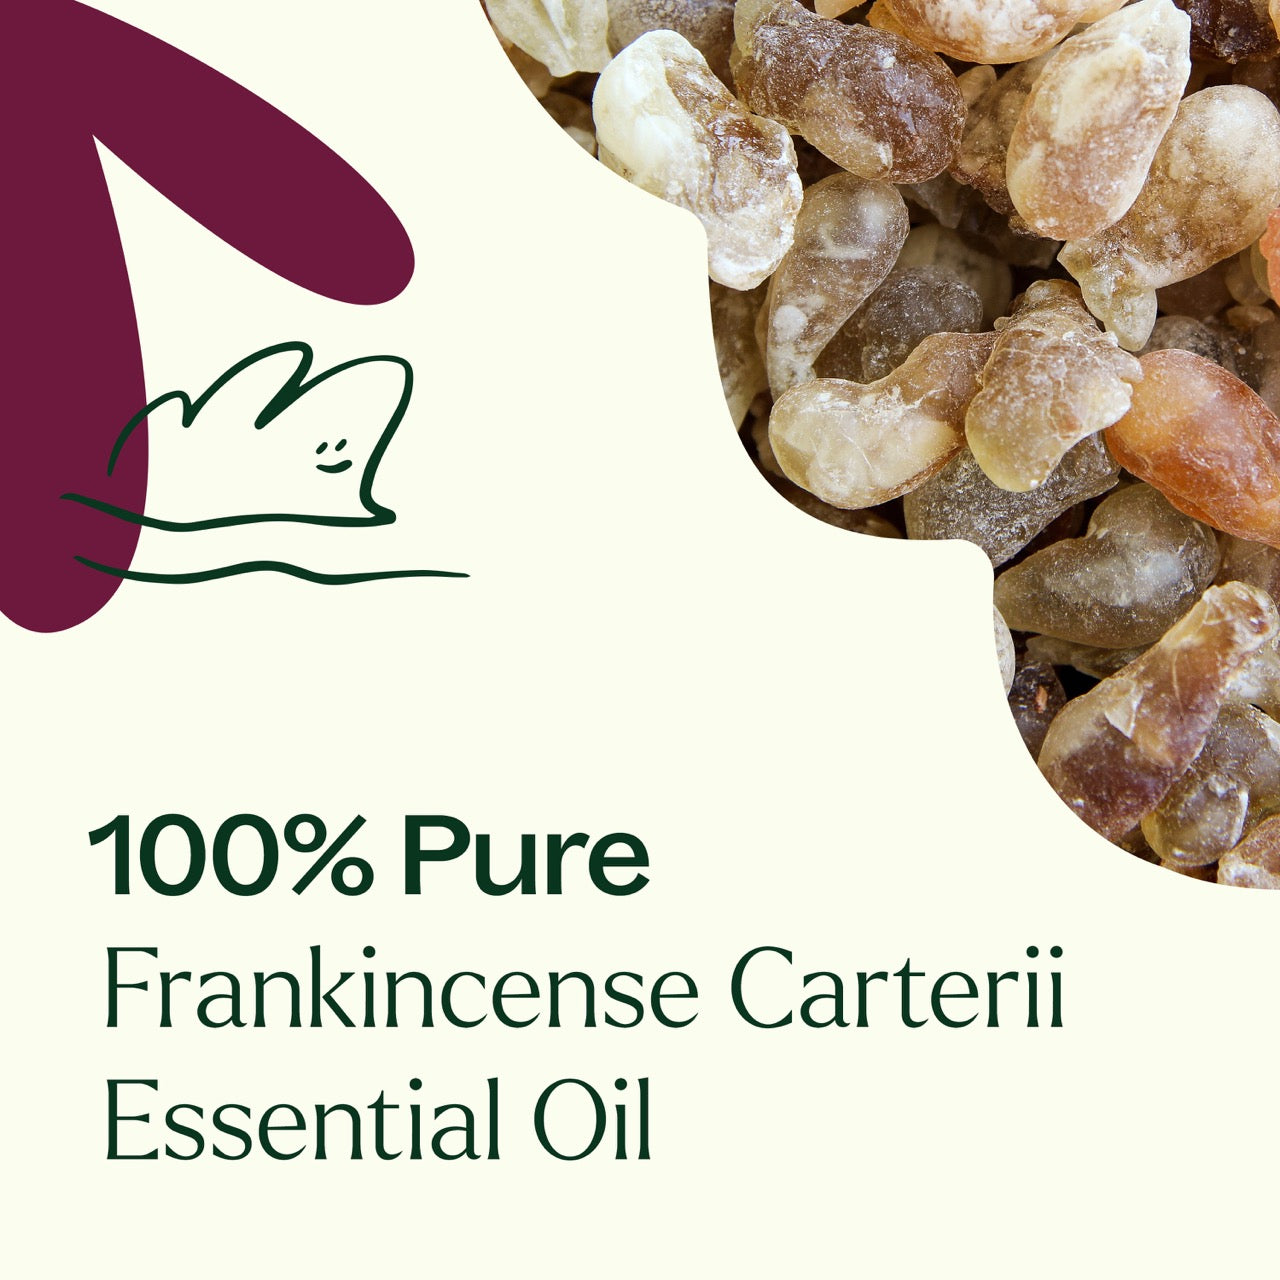 100% pure frankincense carterii essential oil